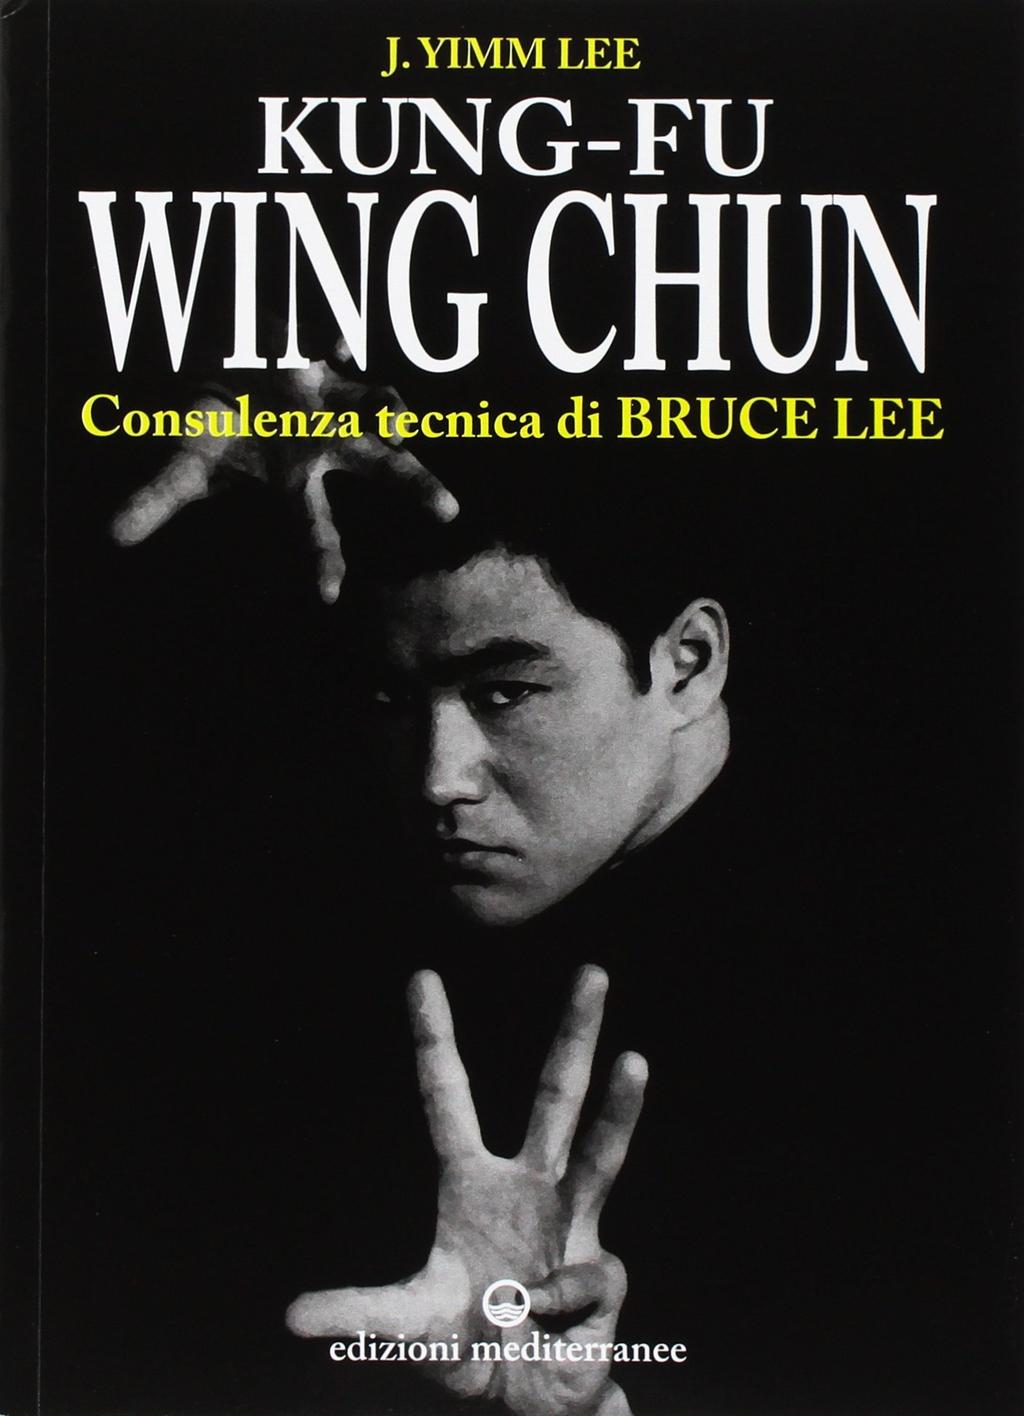 Kung fu wing chun. L'arte dell'autodifesa cinese Scaricare Leggi online Total Downloads: 53338 Formats: djvu pdf epub kindle Rated: 9/10 (5455 votes) Kung fu wing chun.